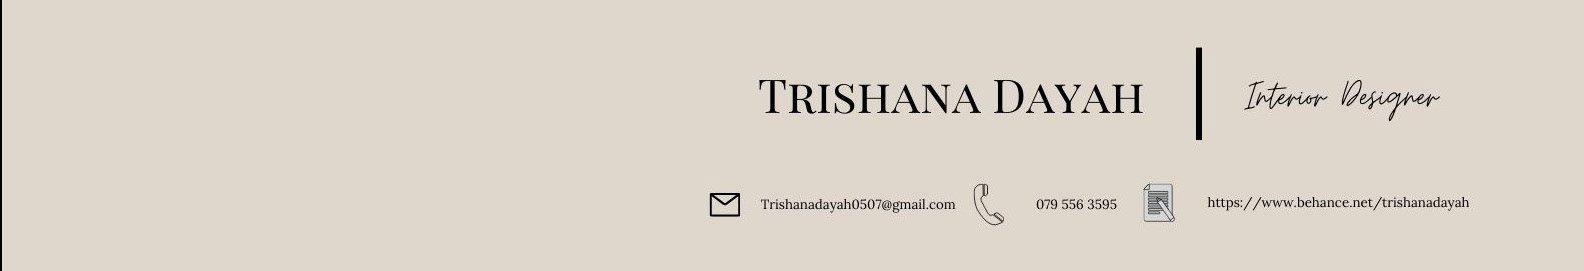 Trishana Dayah profil başlığı